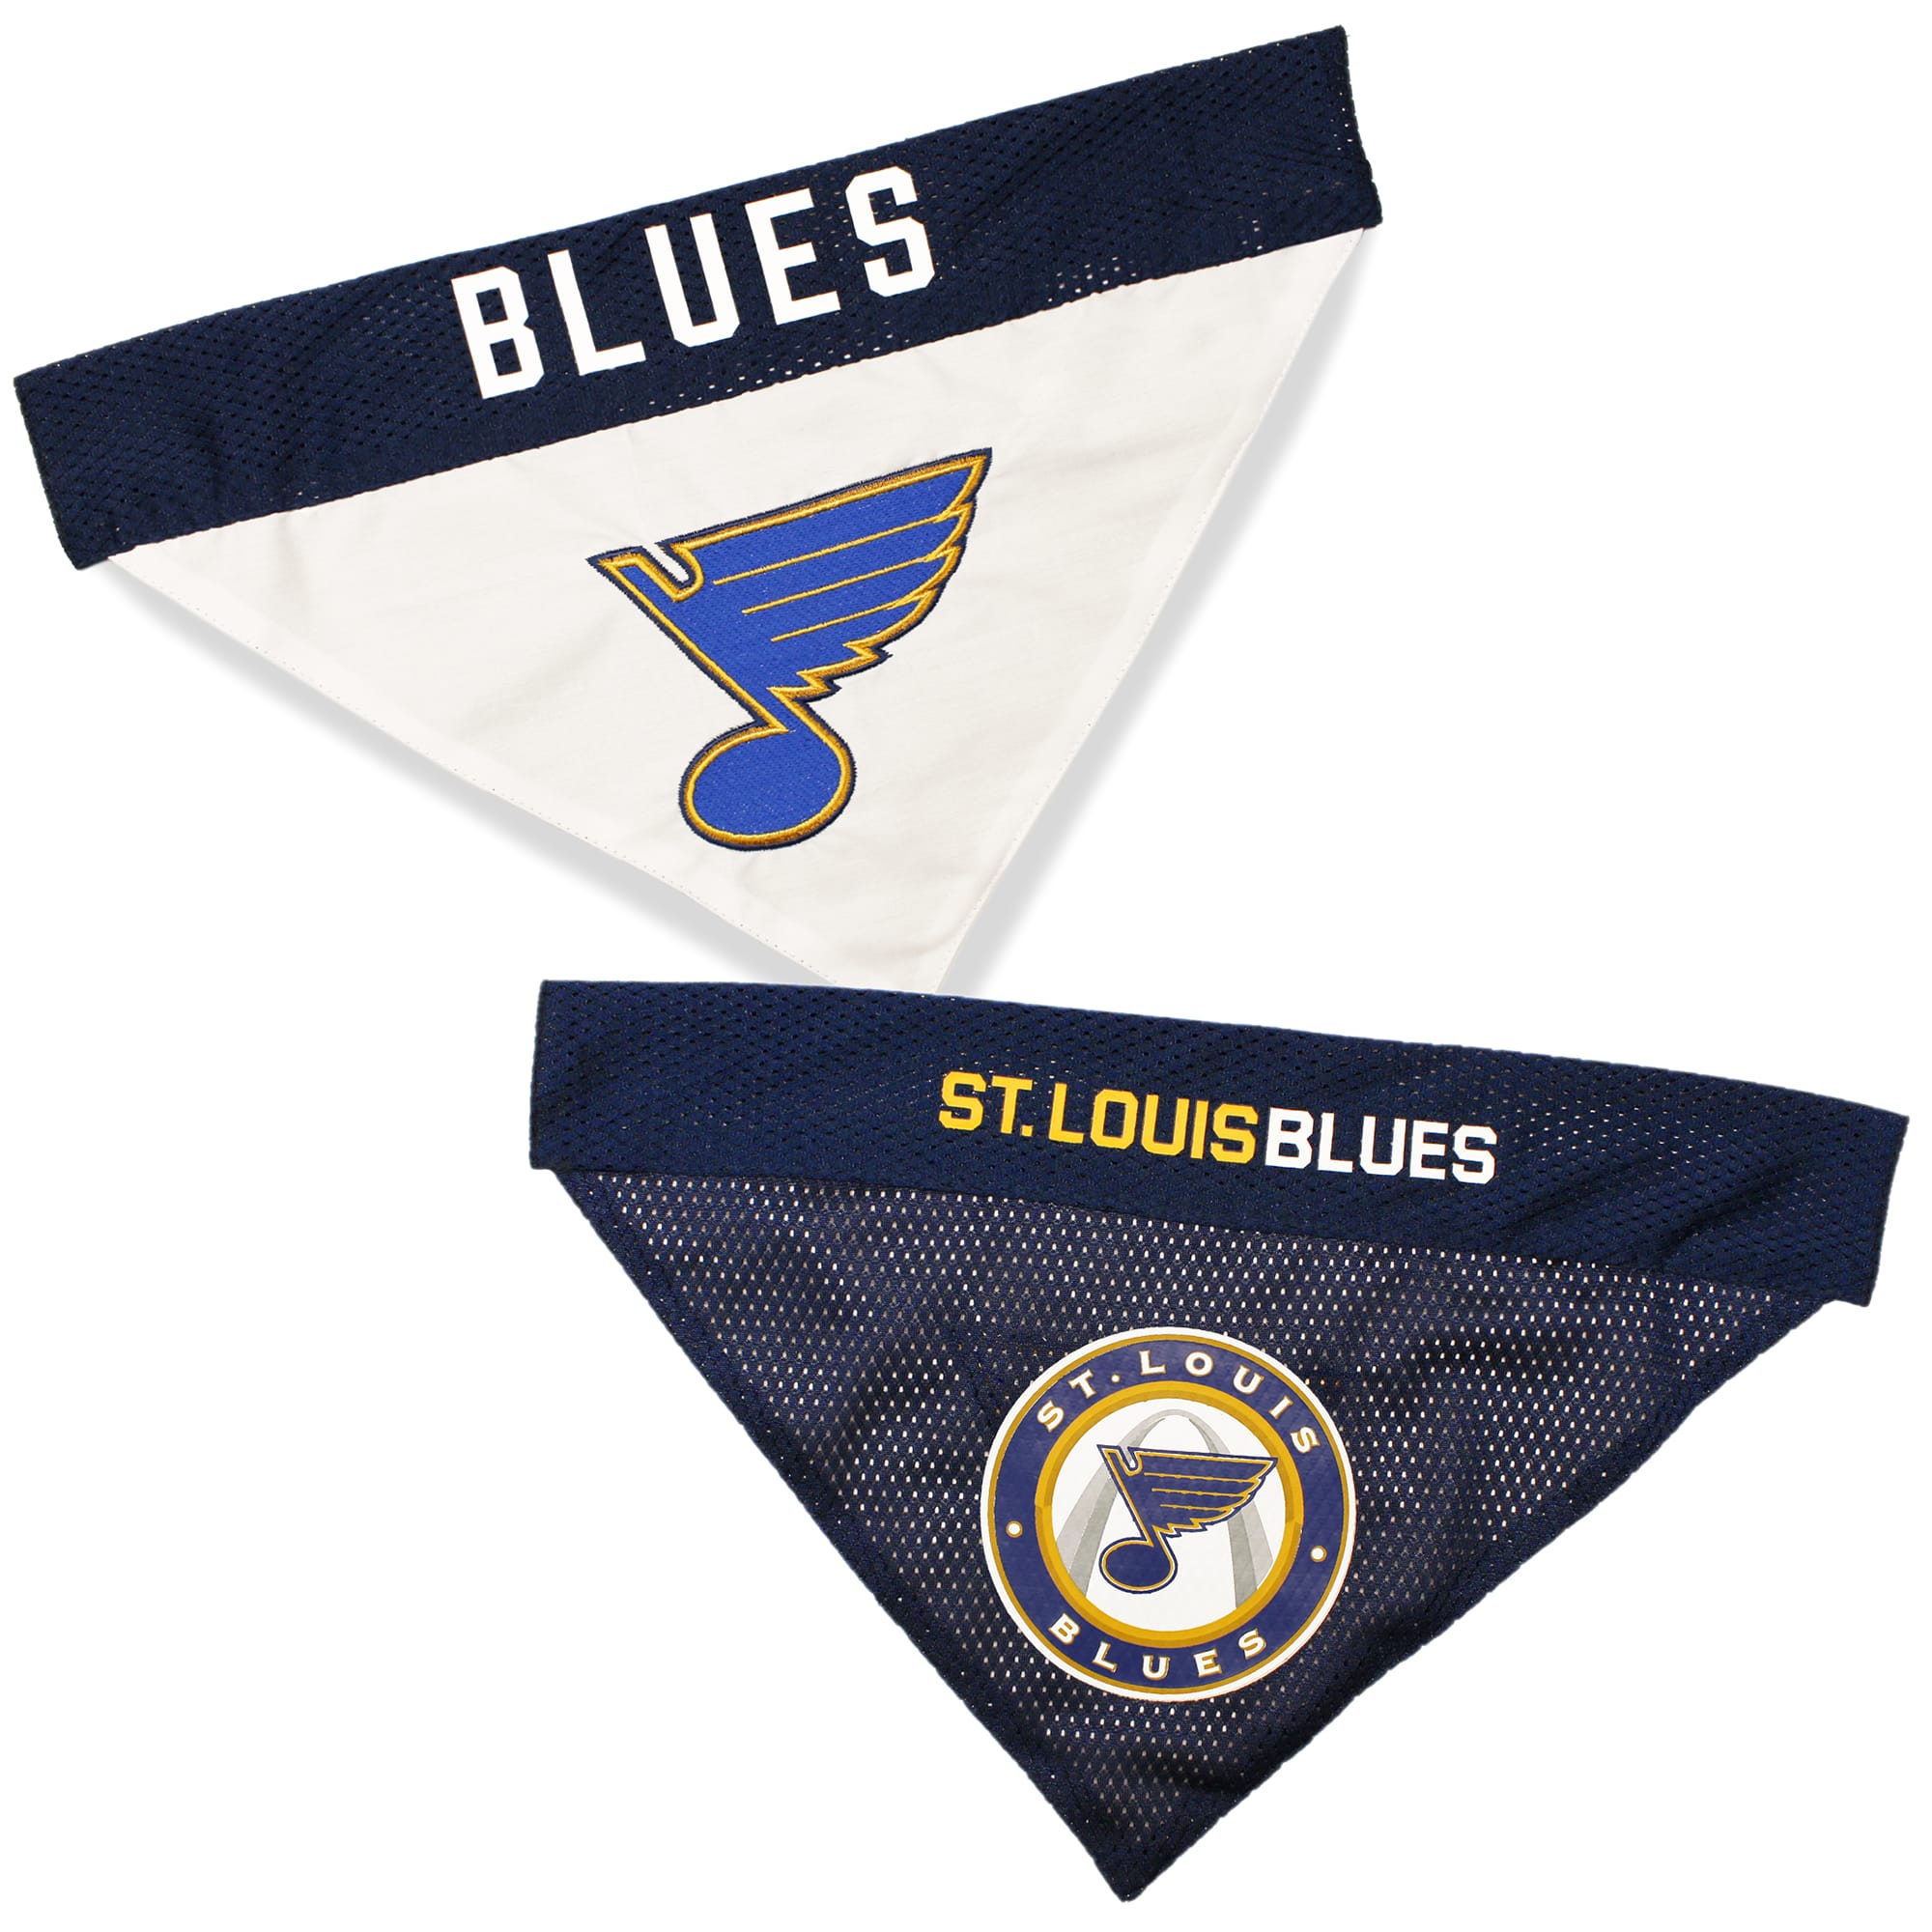 St. Louis Blues Pet Gear, Blues Collars, Chew Toys, Pet Carriers